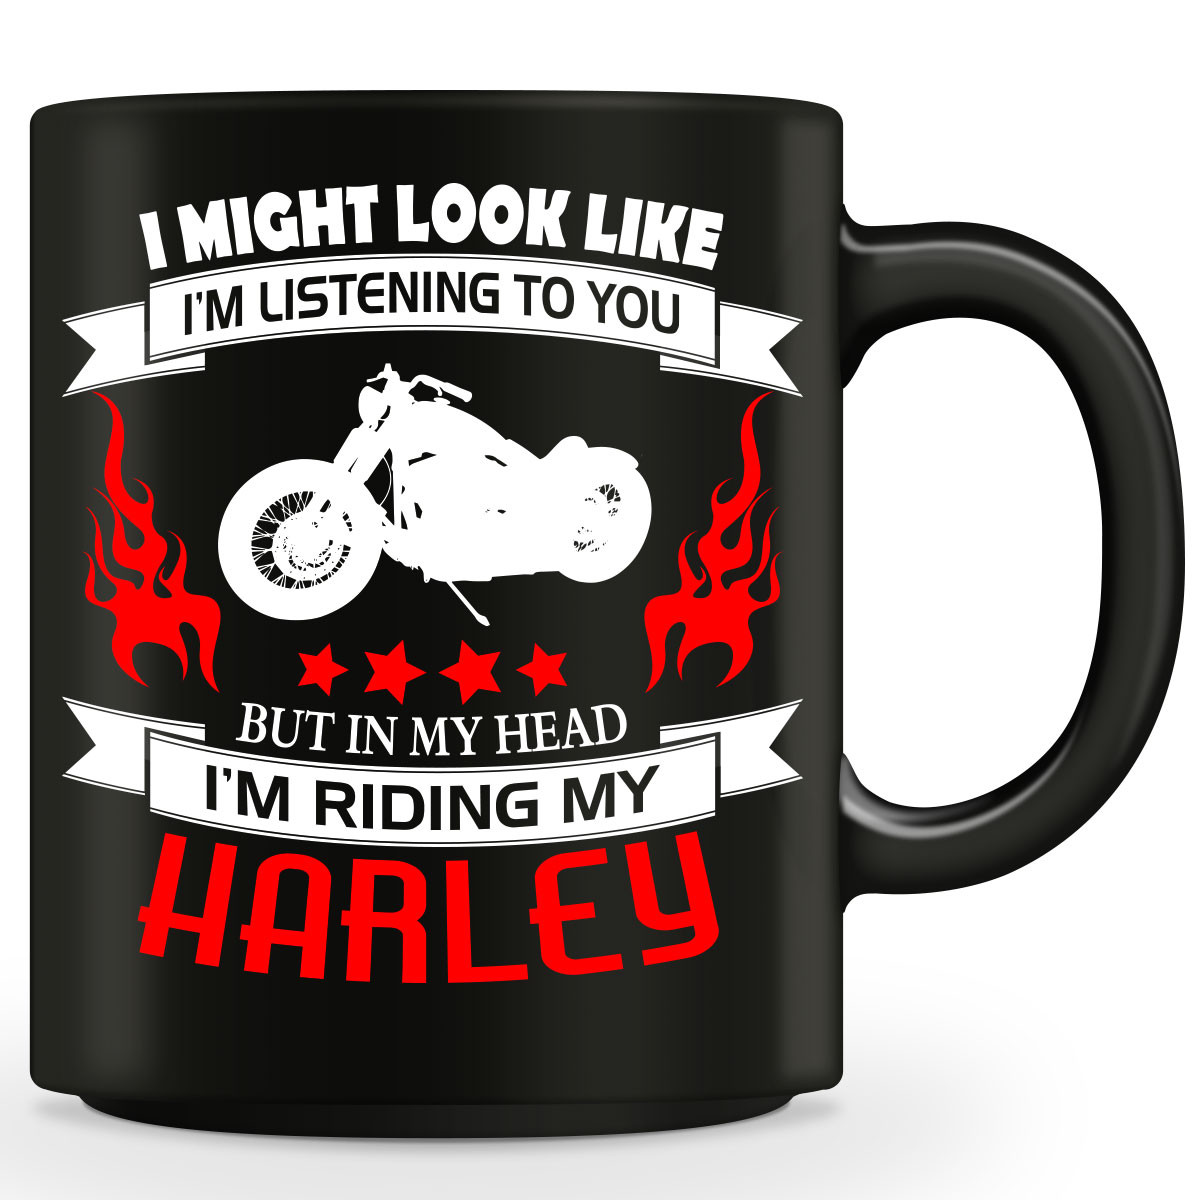 "I Might Look Like I'm Listening To You" Harley Mug